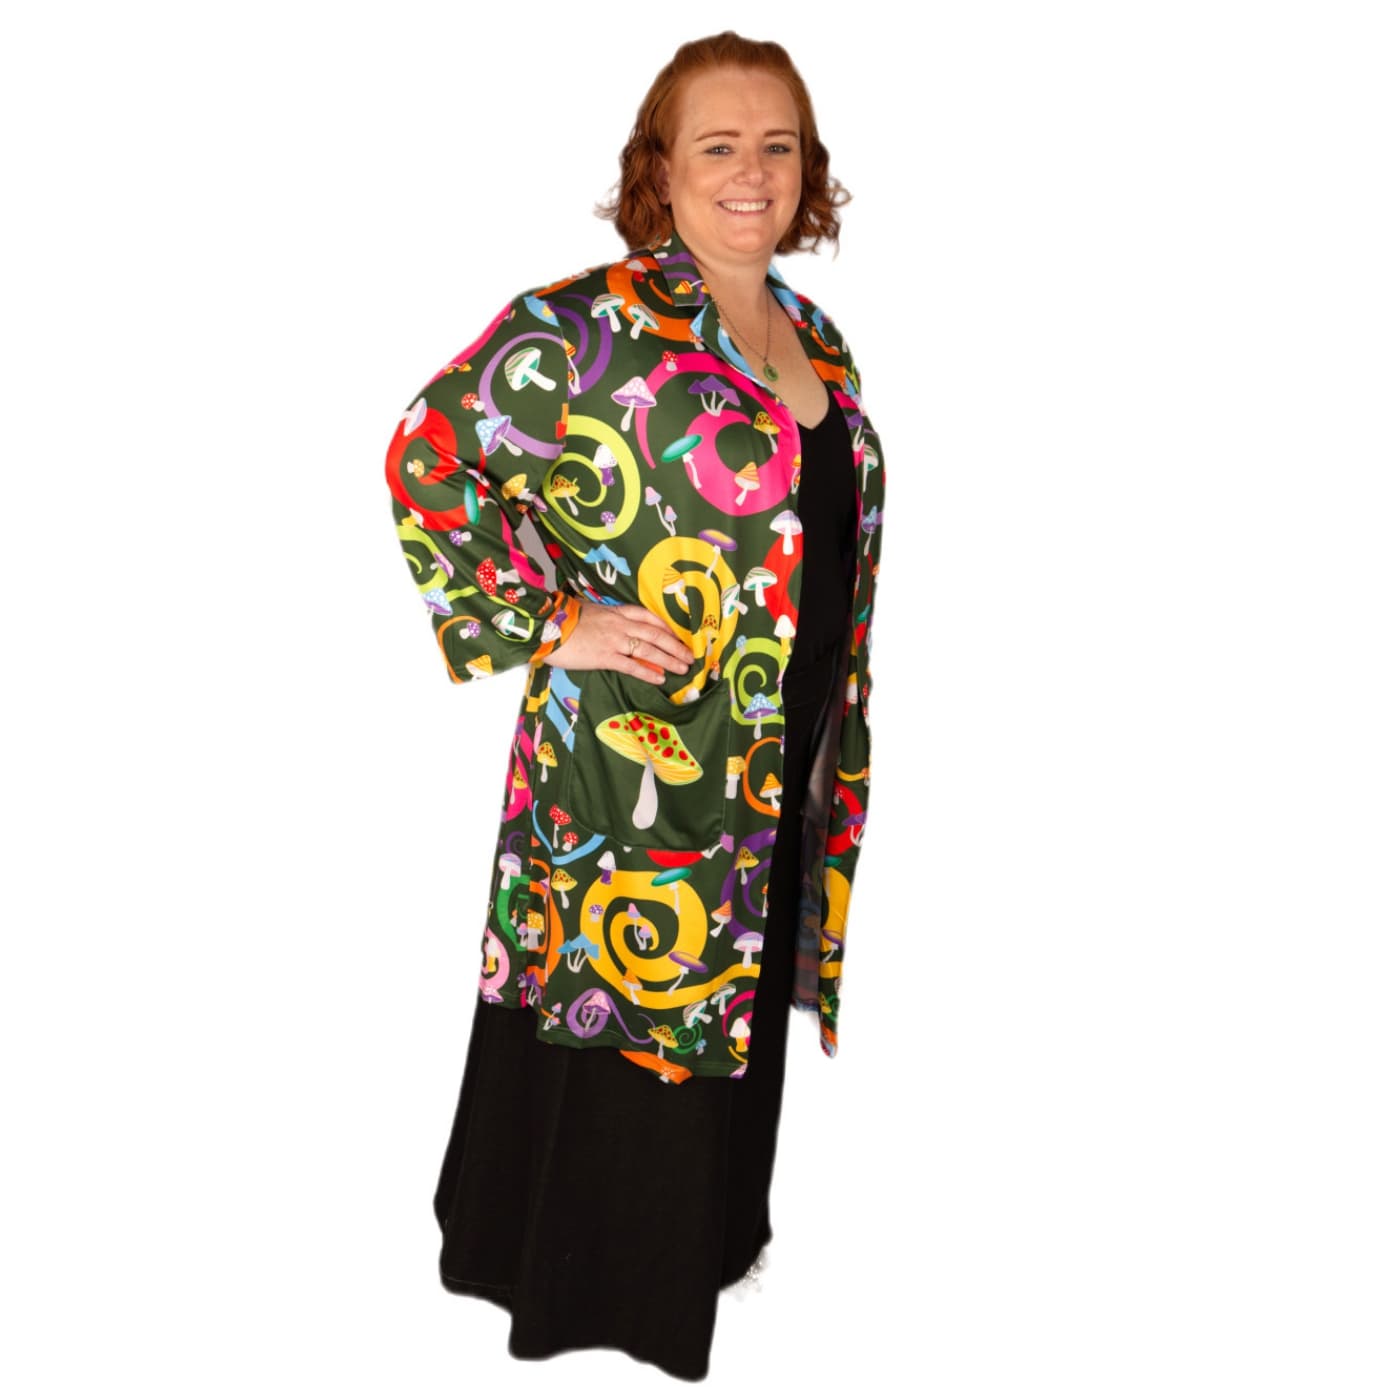 Toadstool Safari Jacket by RainbowsAndFairies.com.au (Mushroom - Psychedelic Swirls - Woodstock - Kimono - Vintage Inspired - Kitsch - Casual Jacket) - SKU: CL_SFJKT_TOADS_ORG - Pic-04